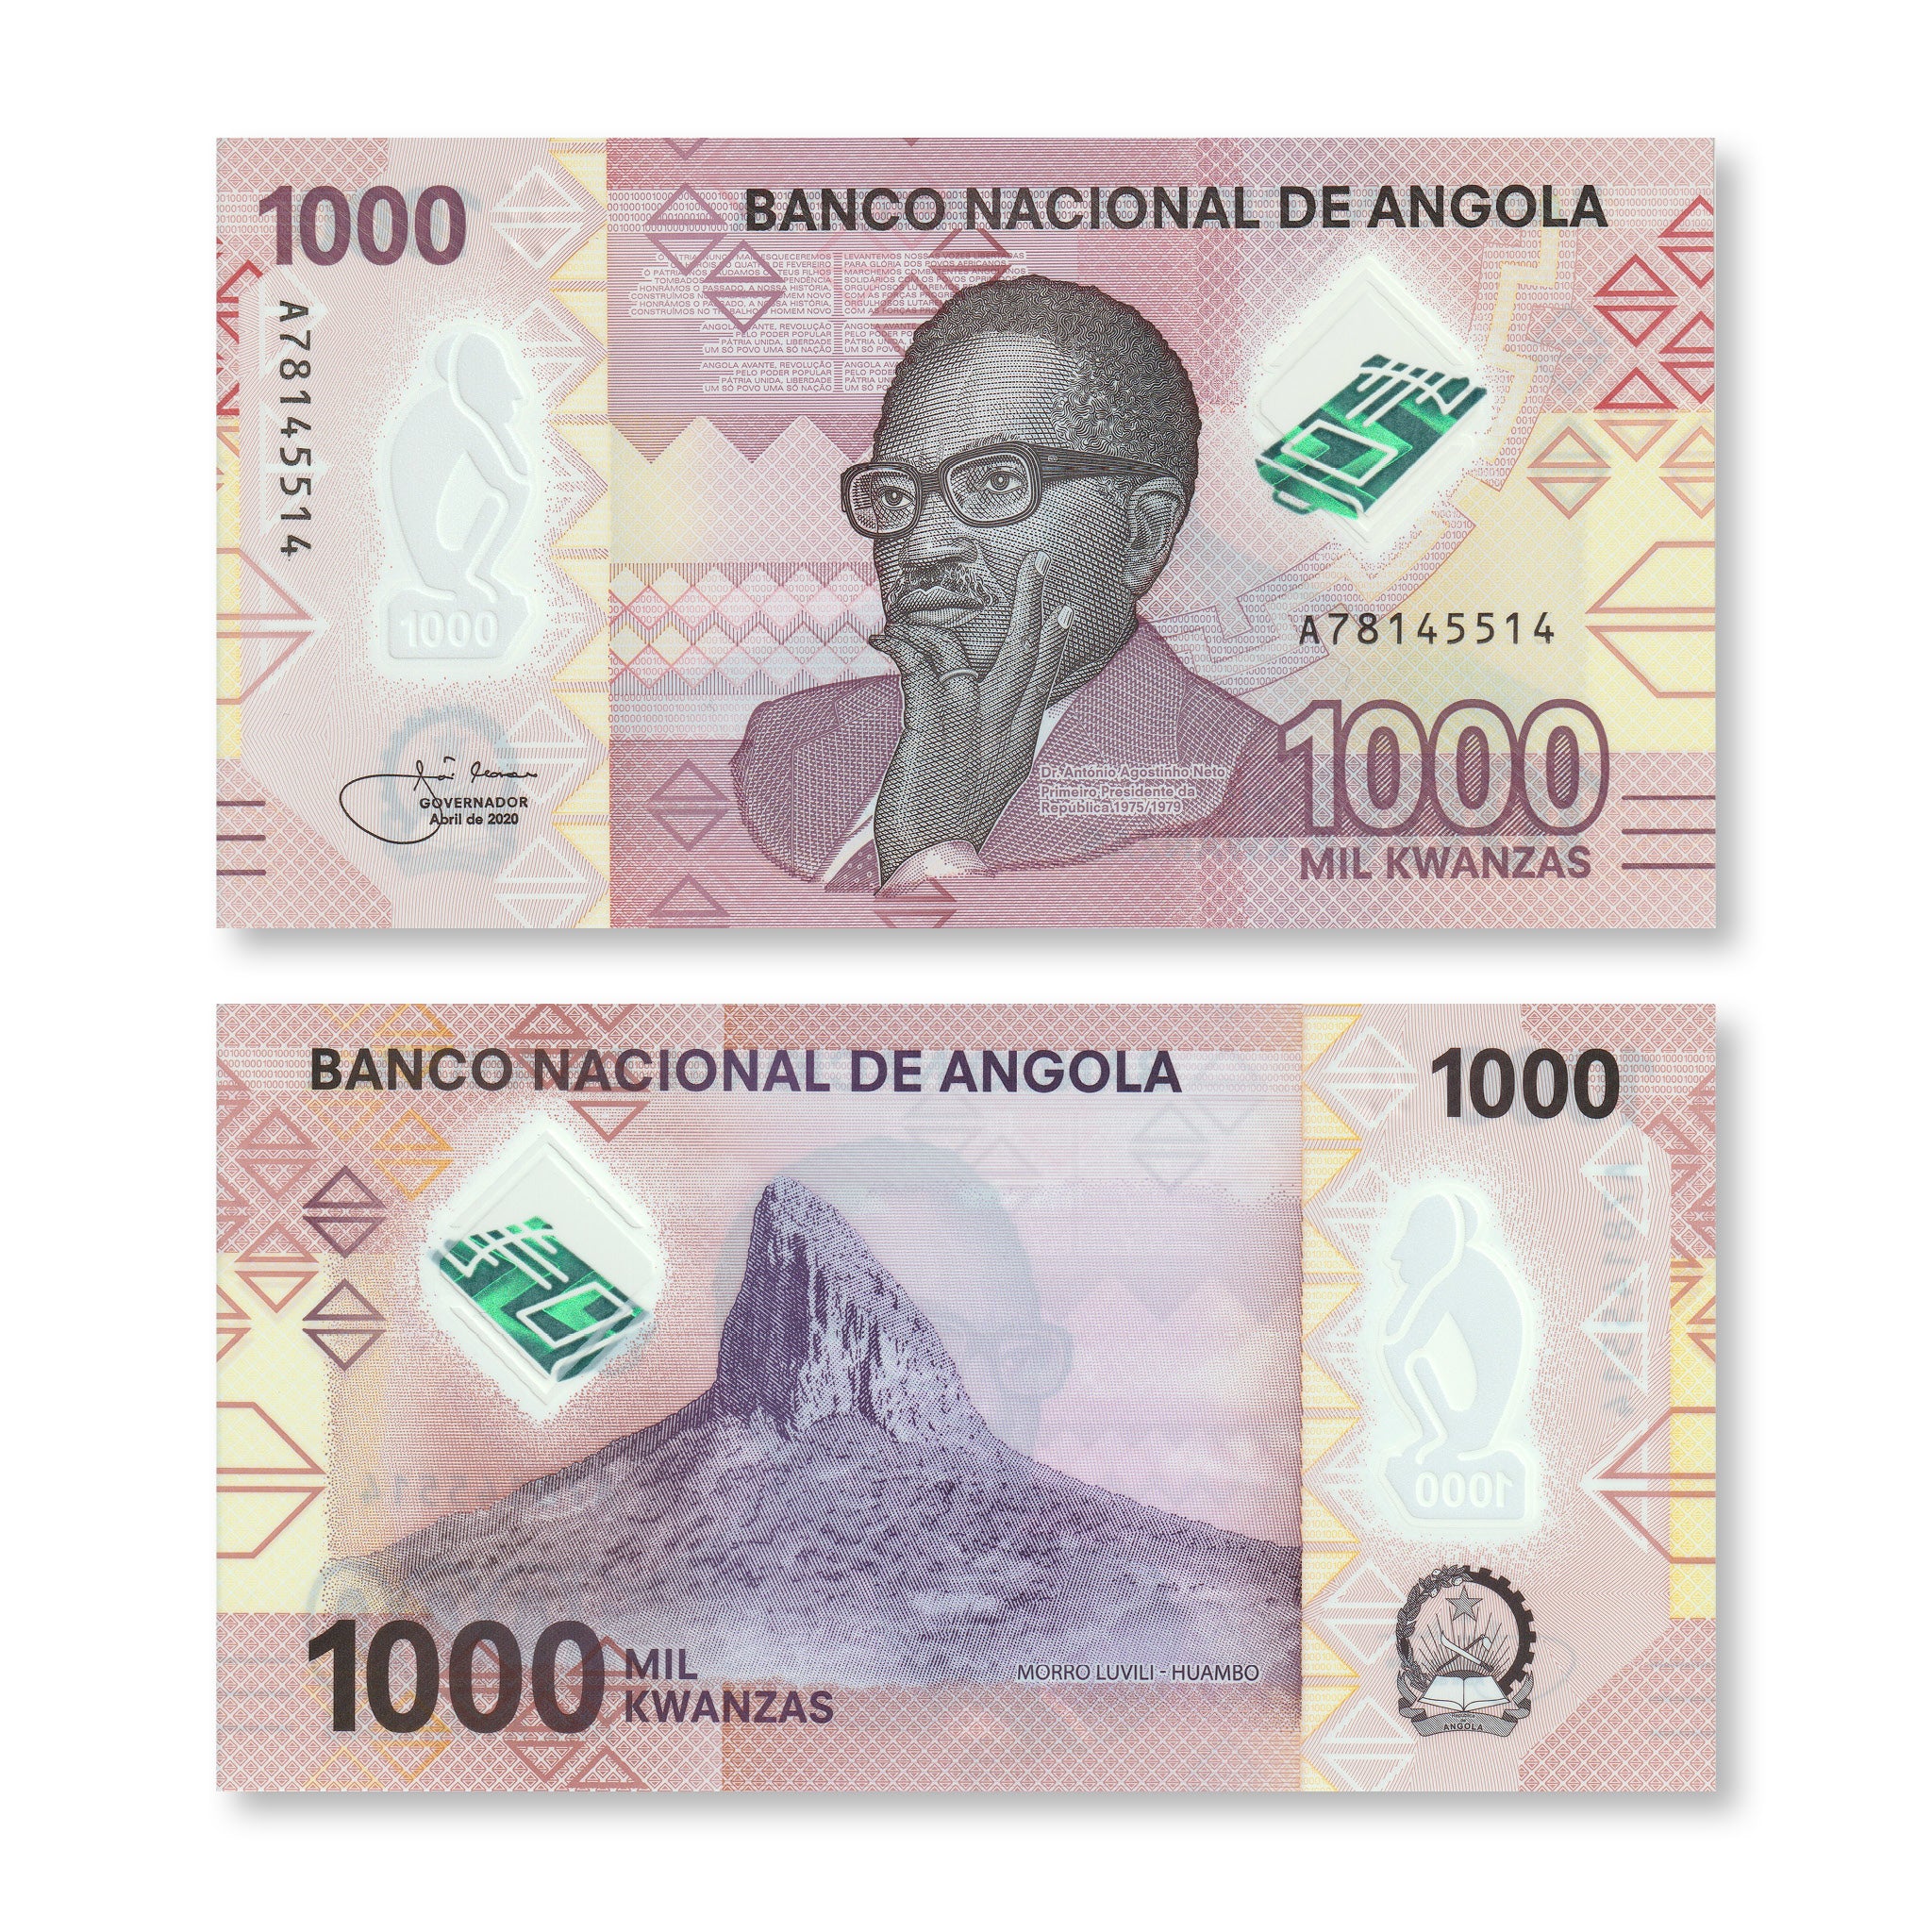 Angola 1000 Kwanzas, 2020, B559a, UNC - Robert's World Money - World Banknotes